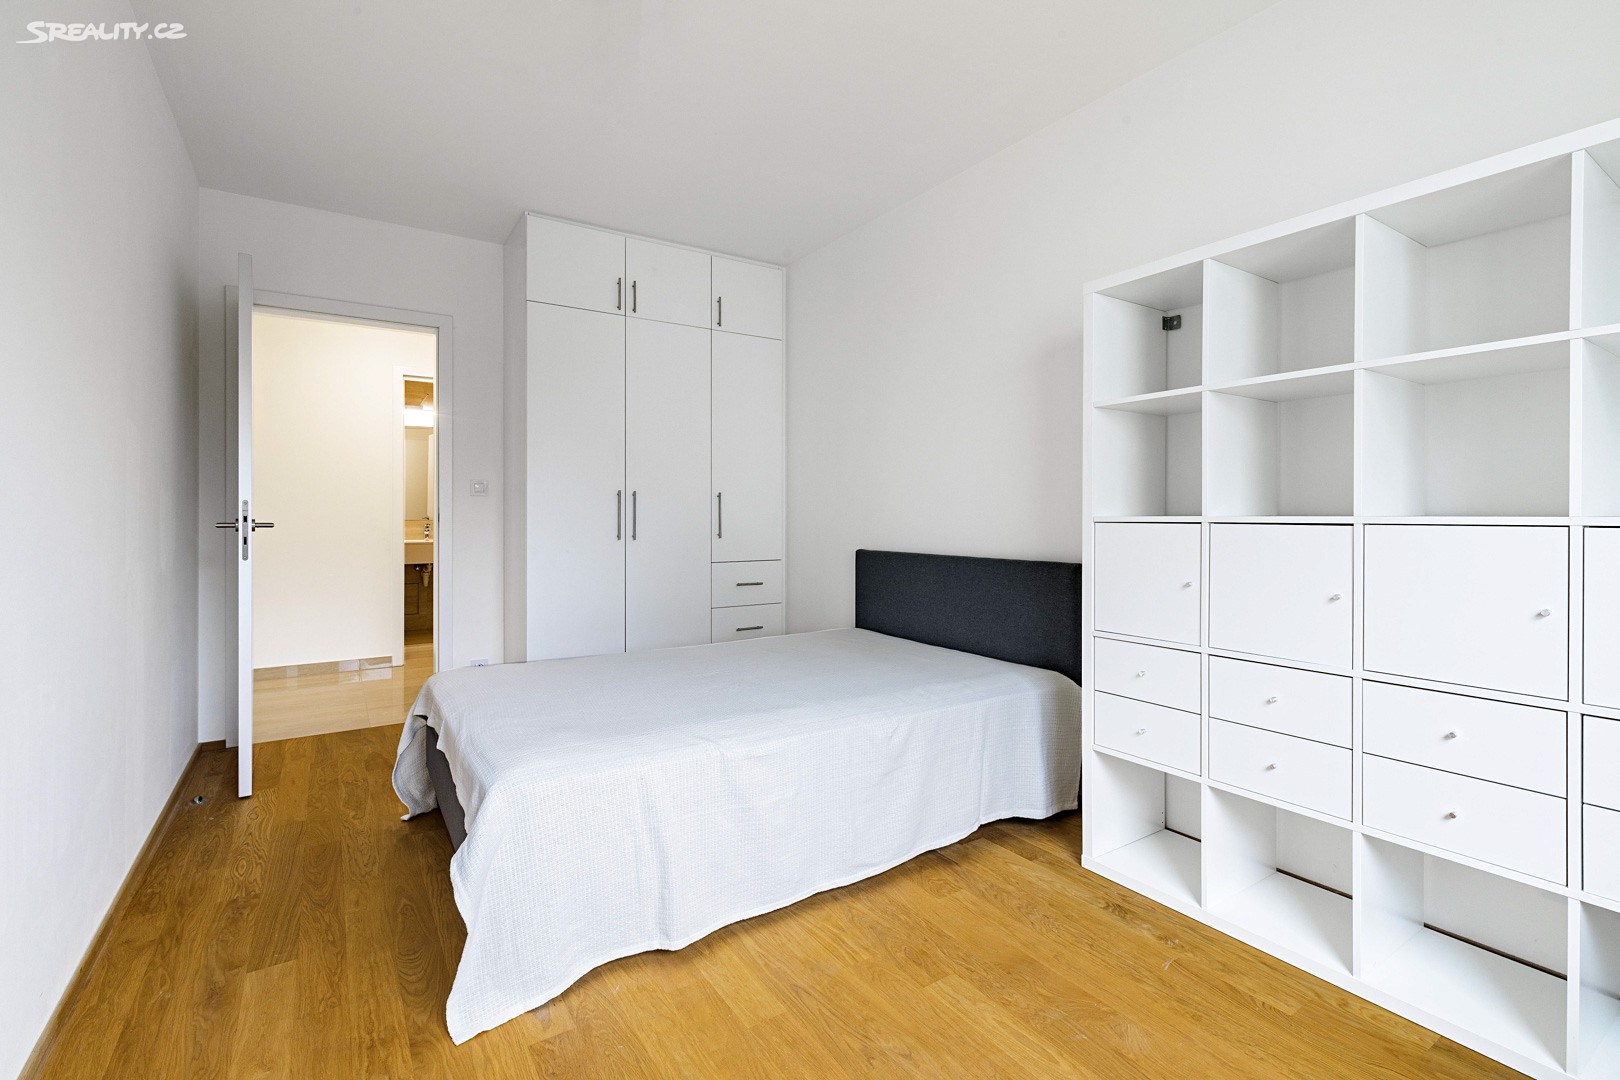 Pronájem bytu 4+kk 106 m², Pod dvorem, Praha 6 - Veleslavín